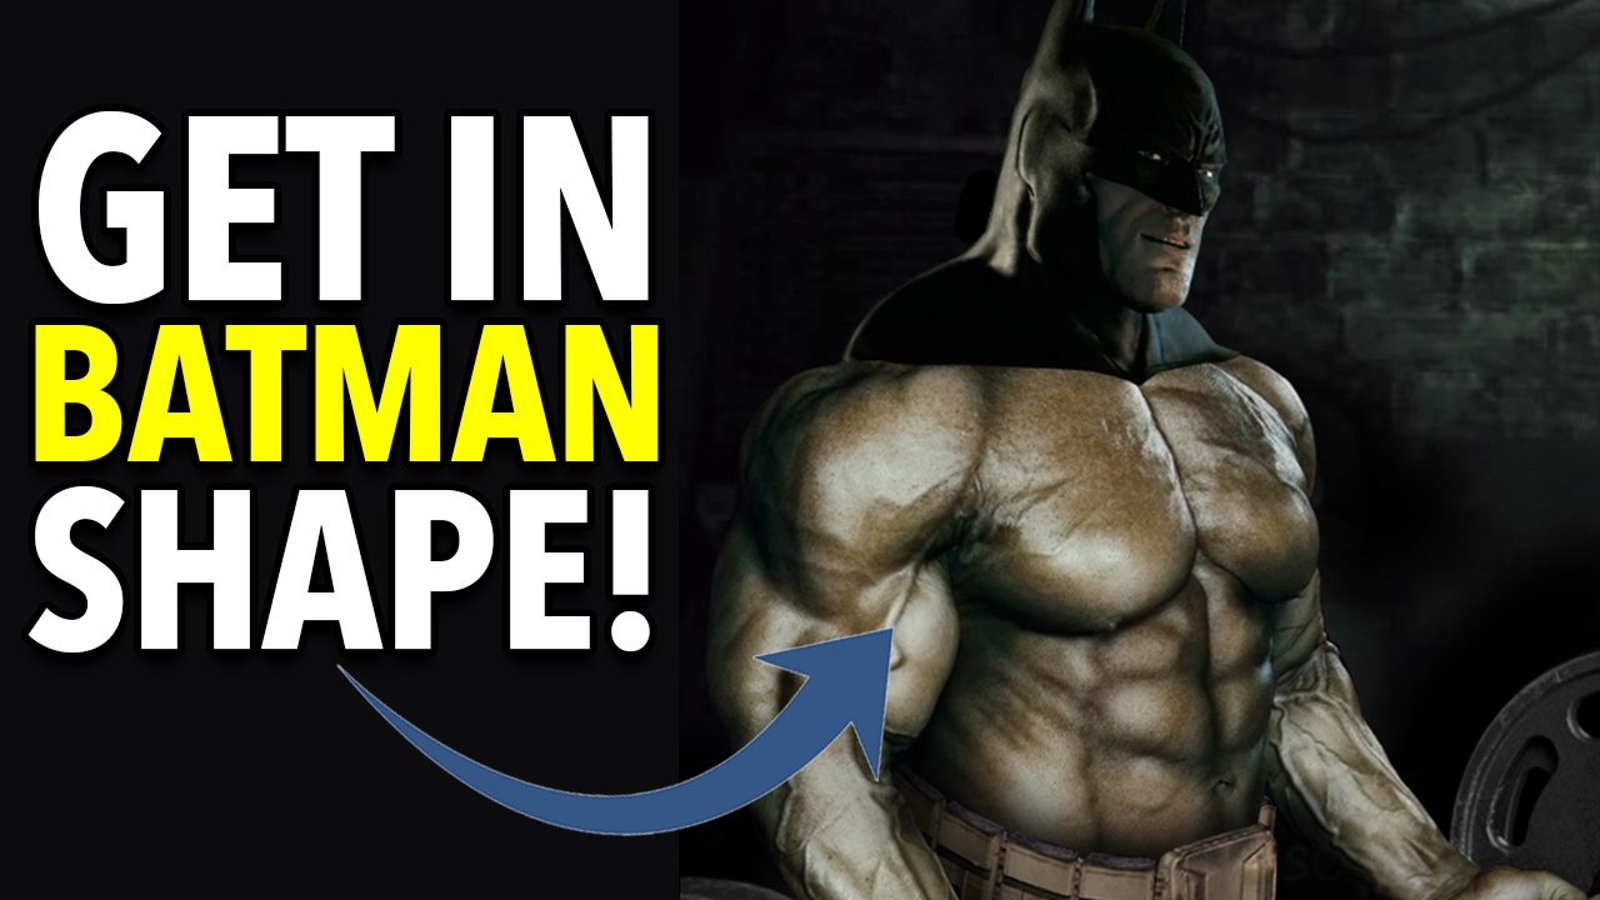 Batman Workout Routine and Diet Plan: Train like The Dark Knight!